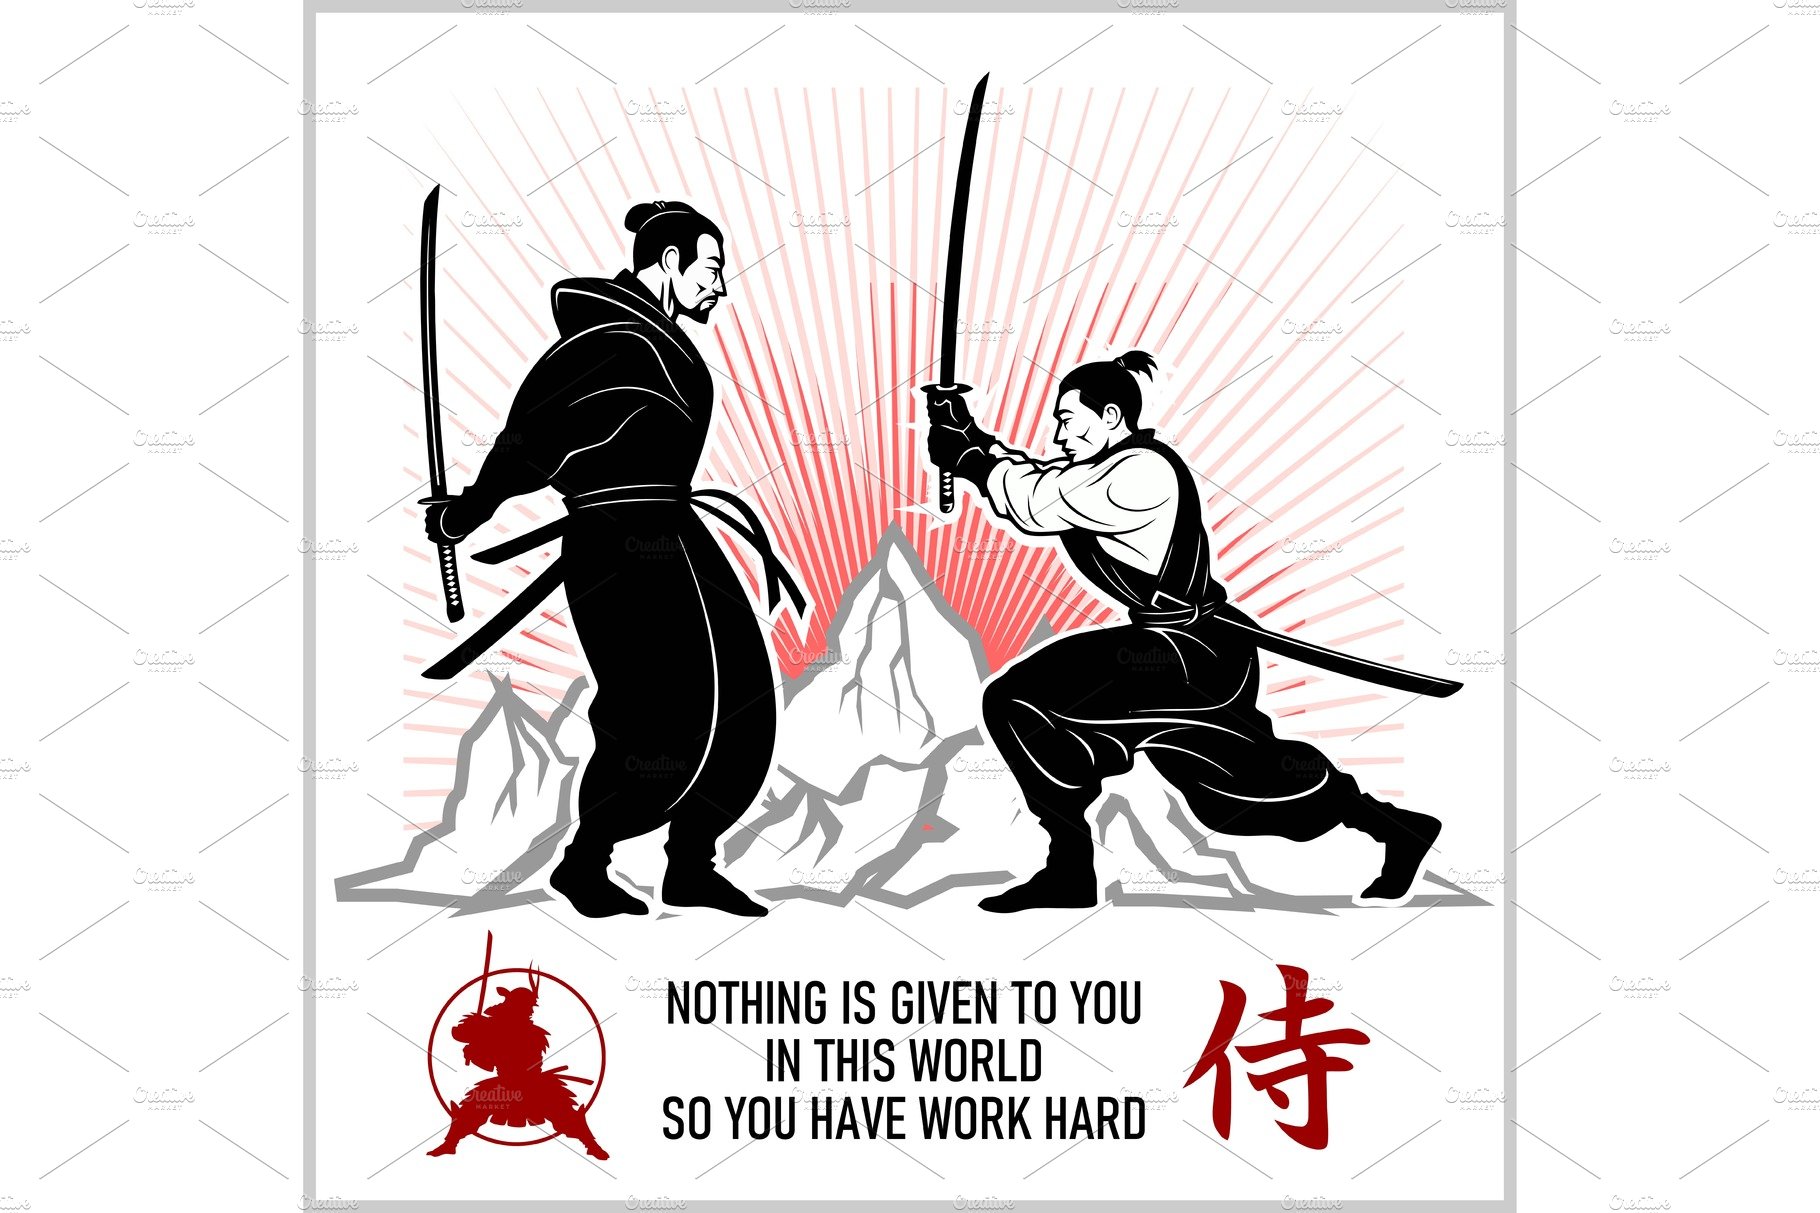 Samurai Warriors With Katana Sword cover image.